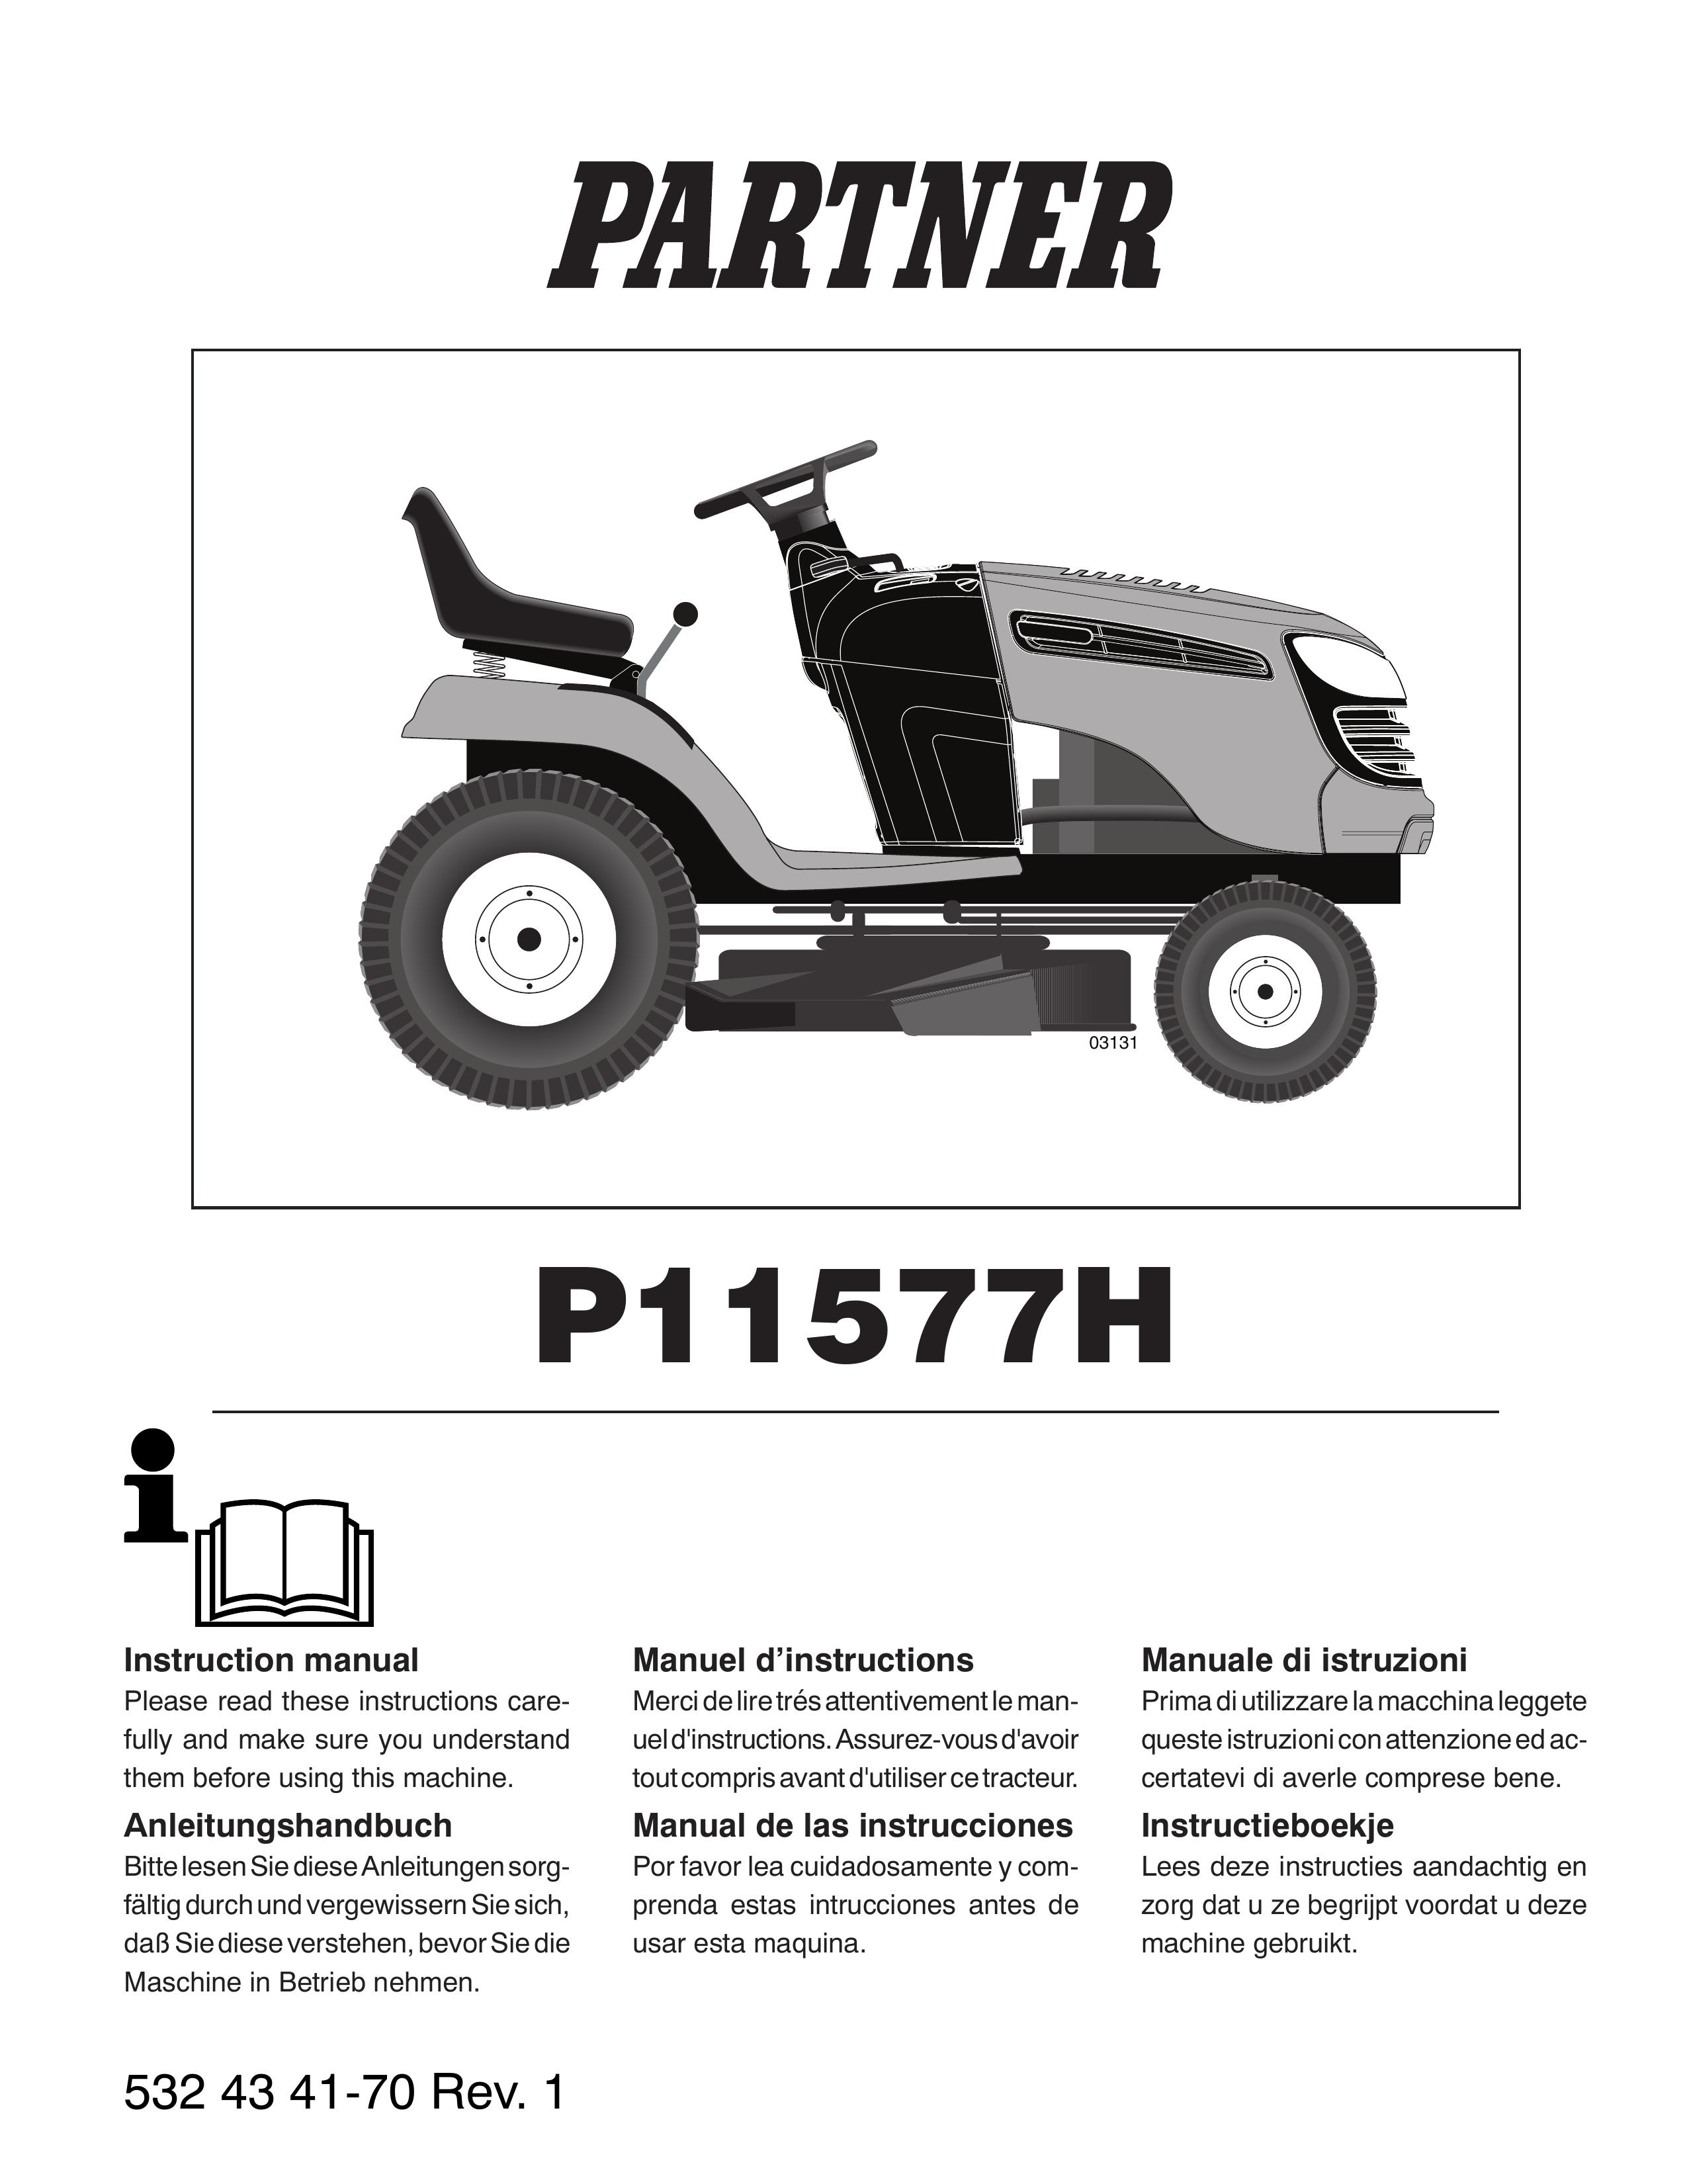 Partner Tech P11577H Lawn Mower User Manual